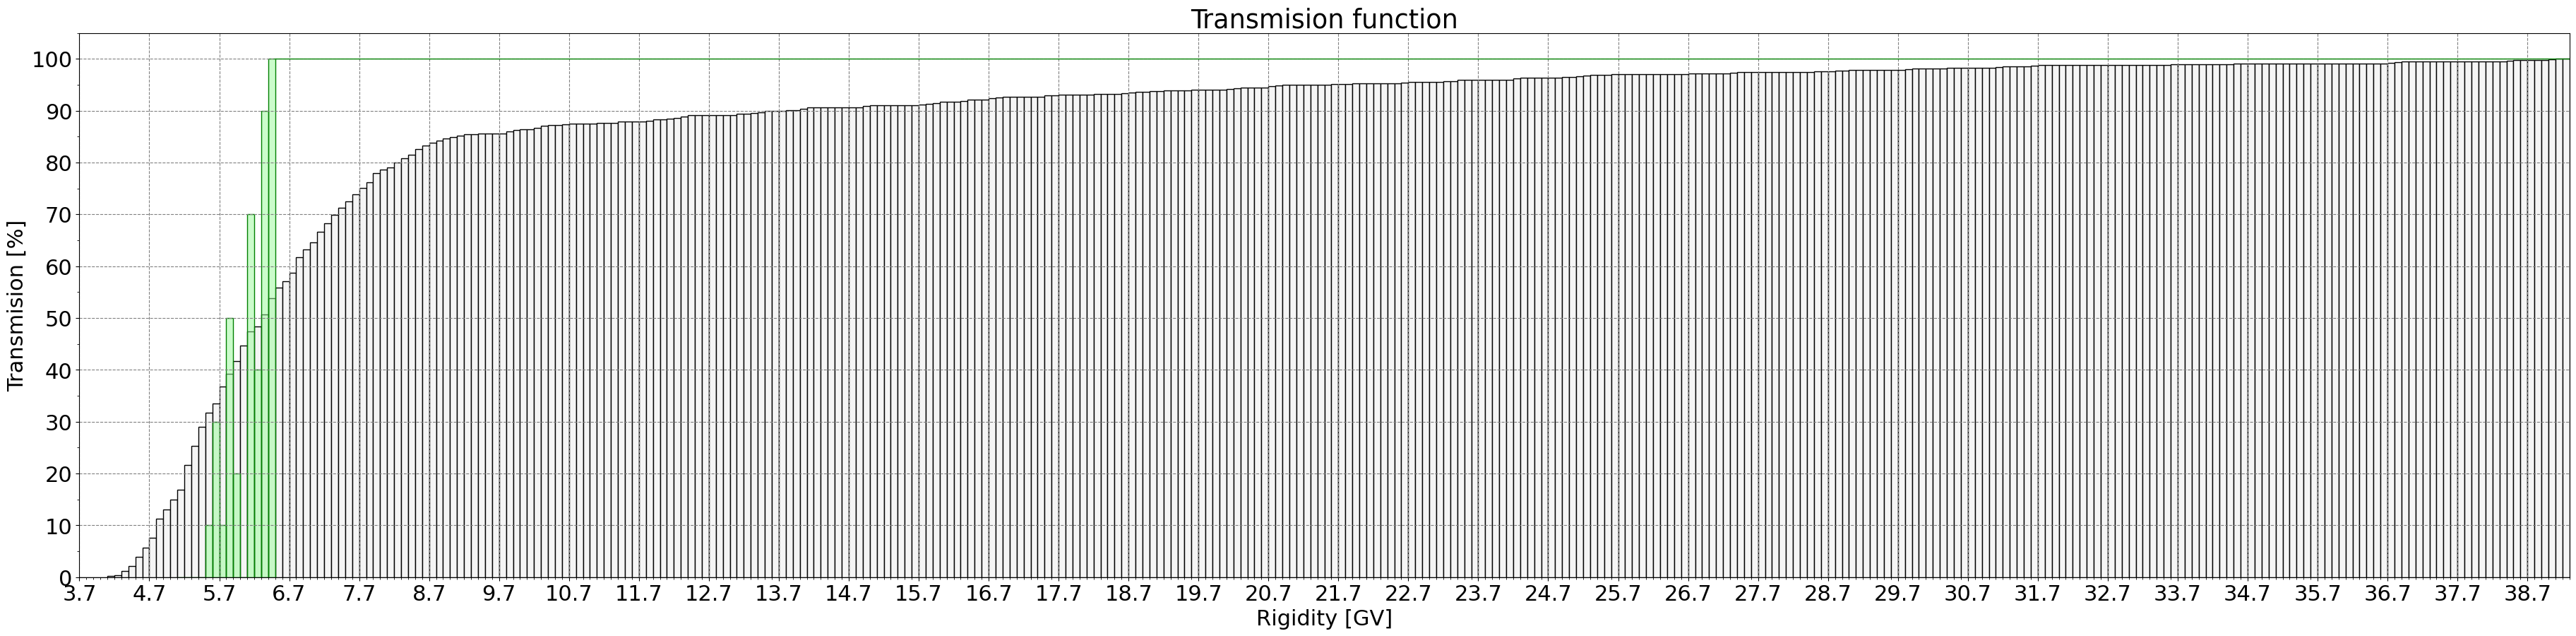 transmission_function